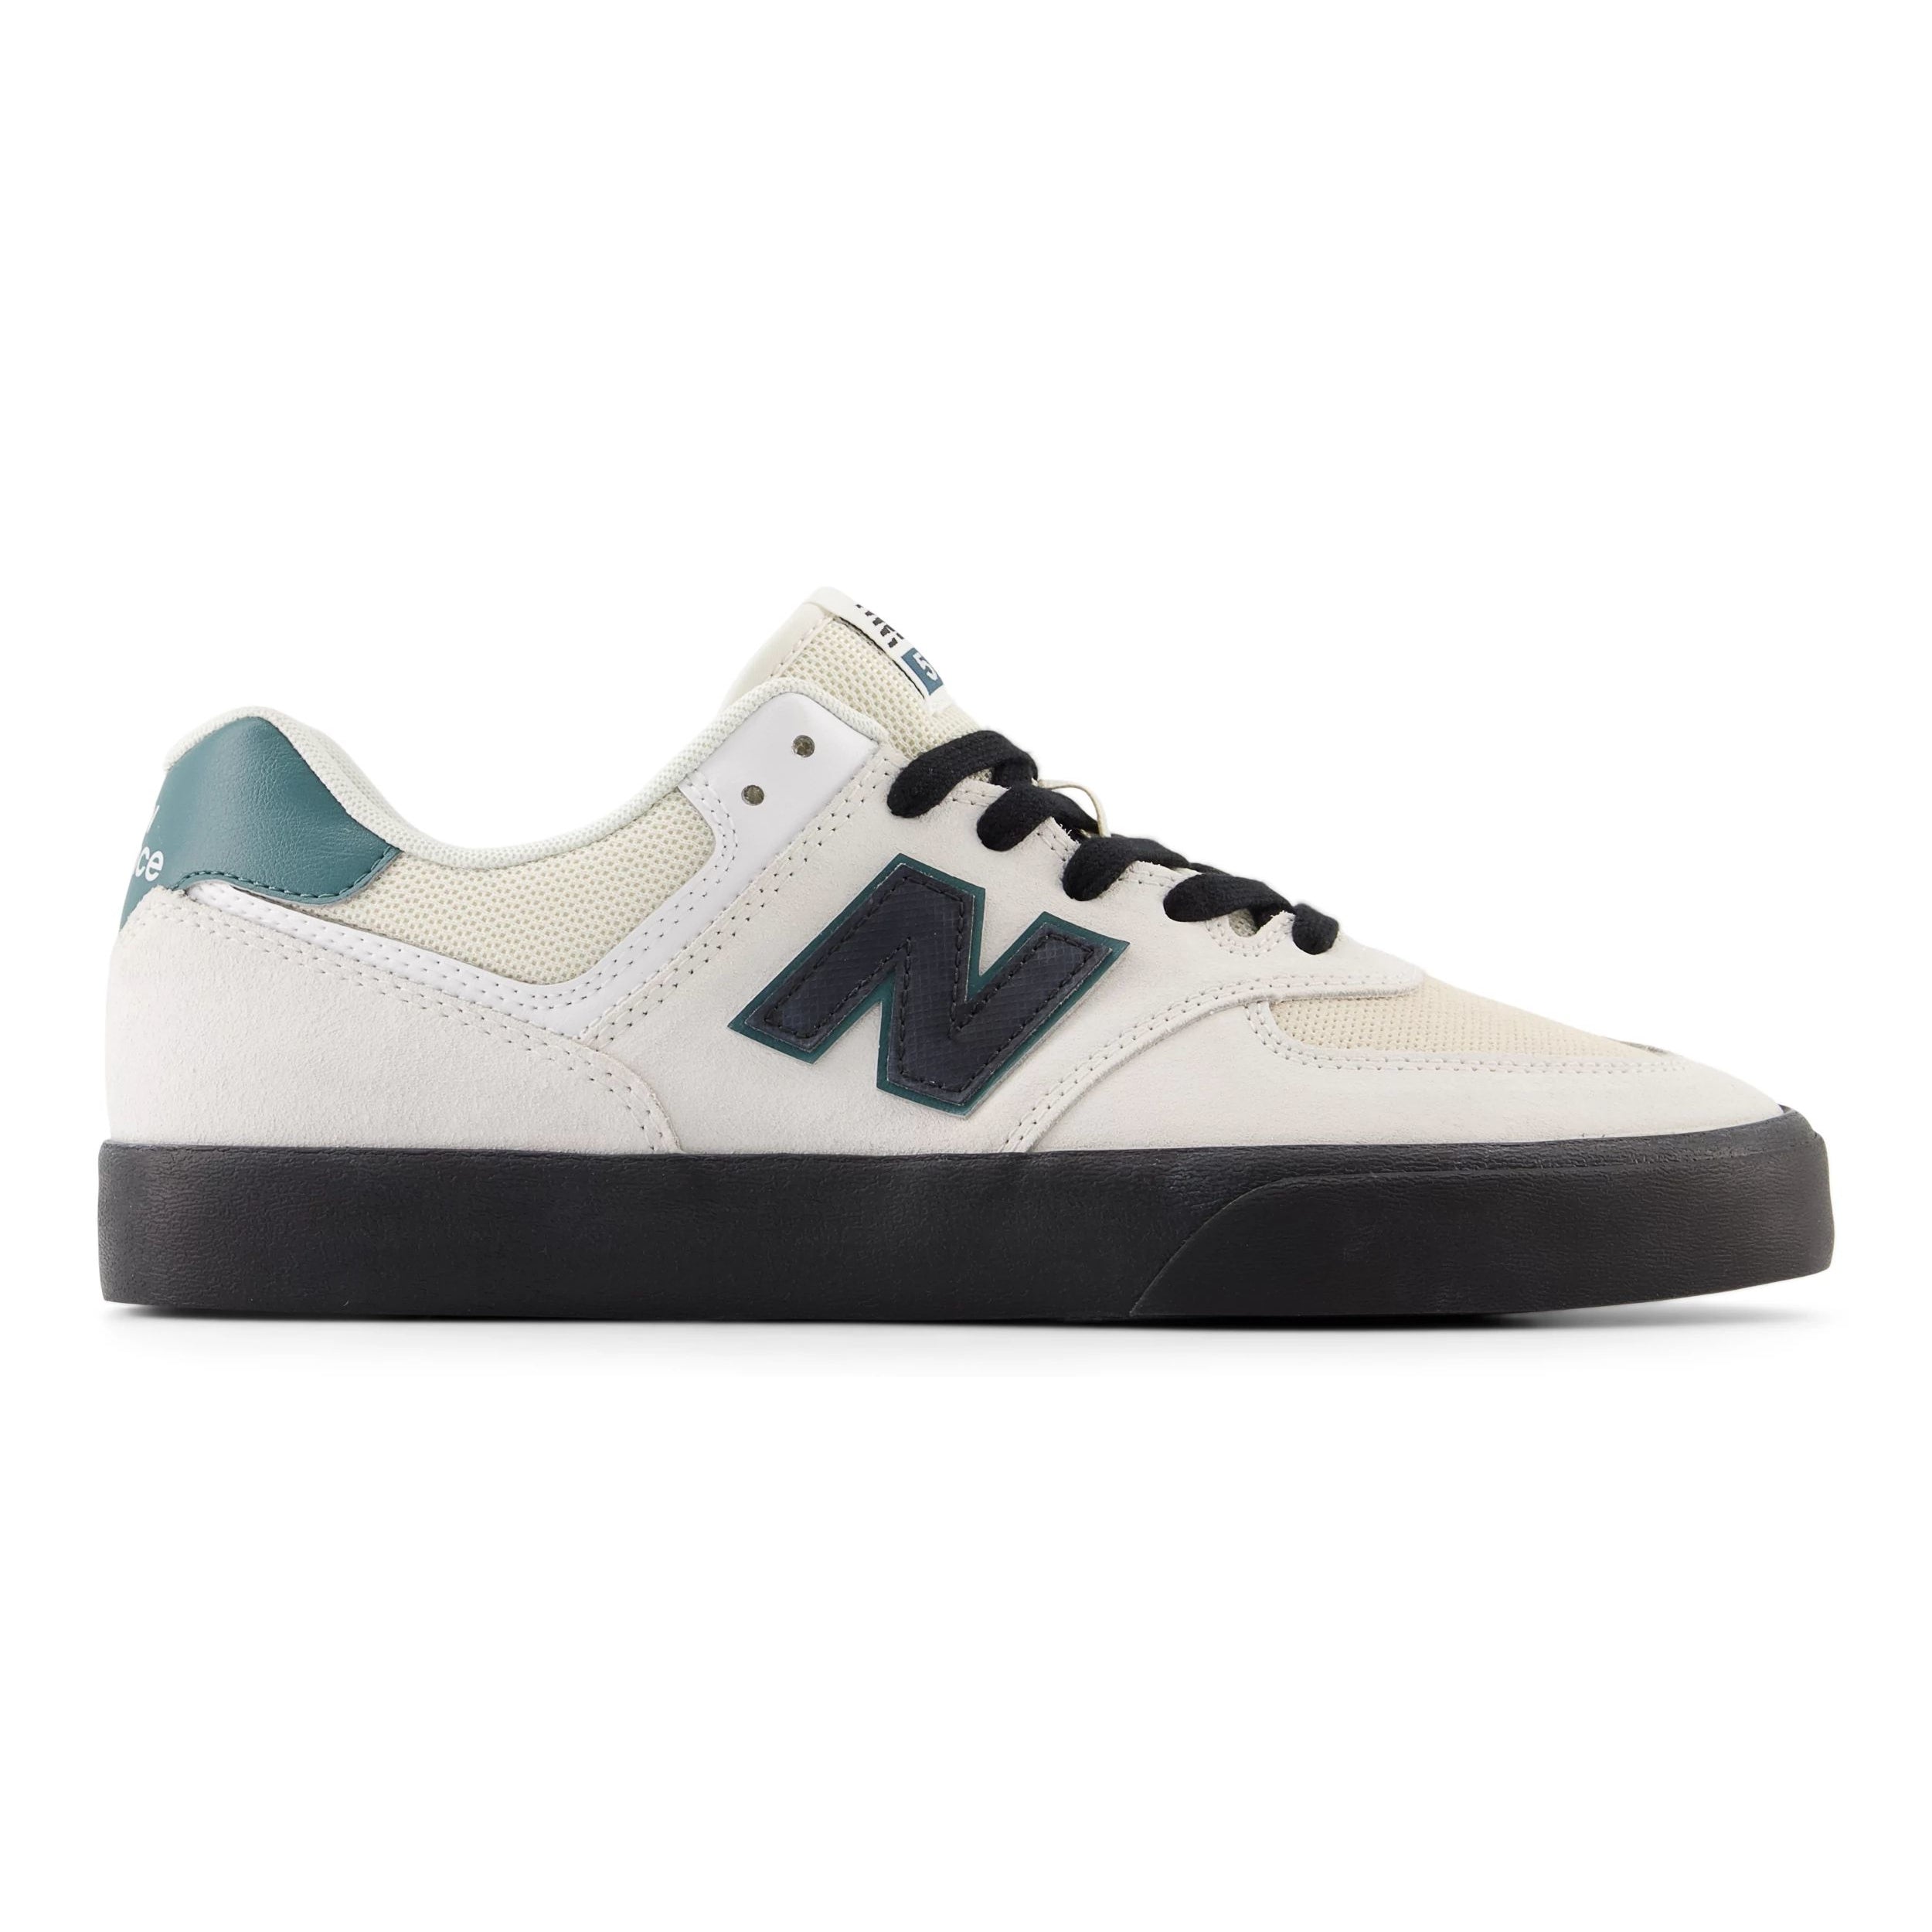 Sea Salt NM574 Vulc NB Numeric Skate Shoe